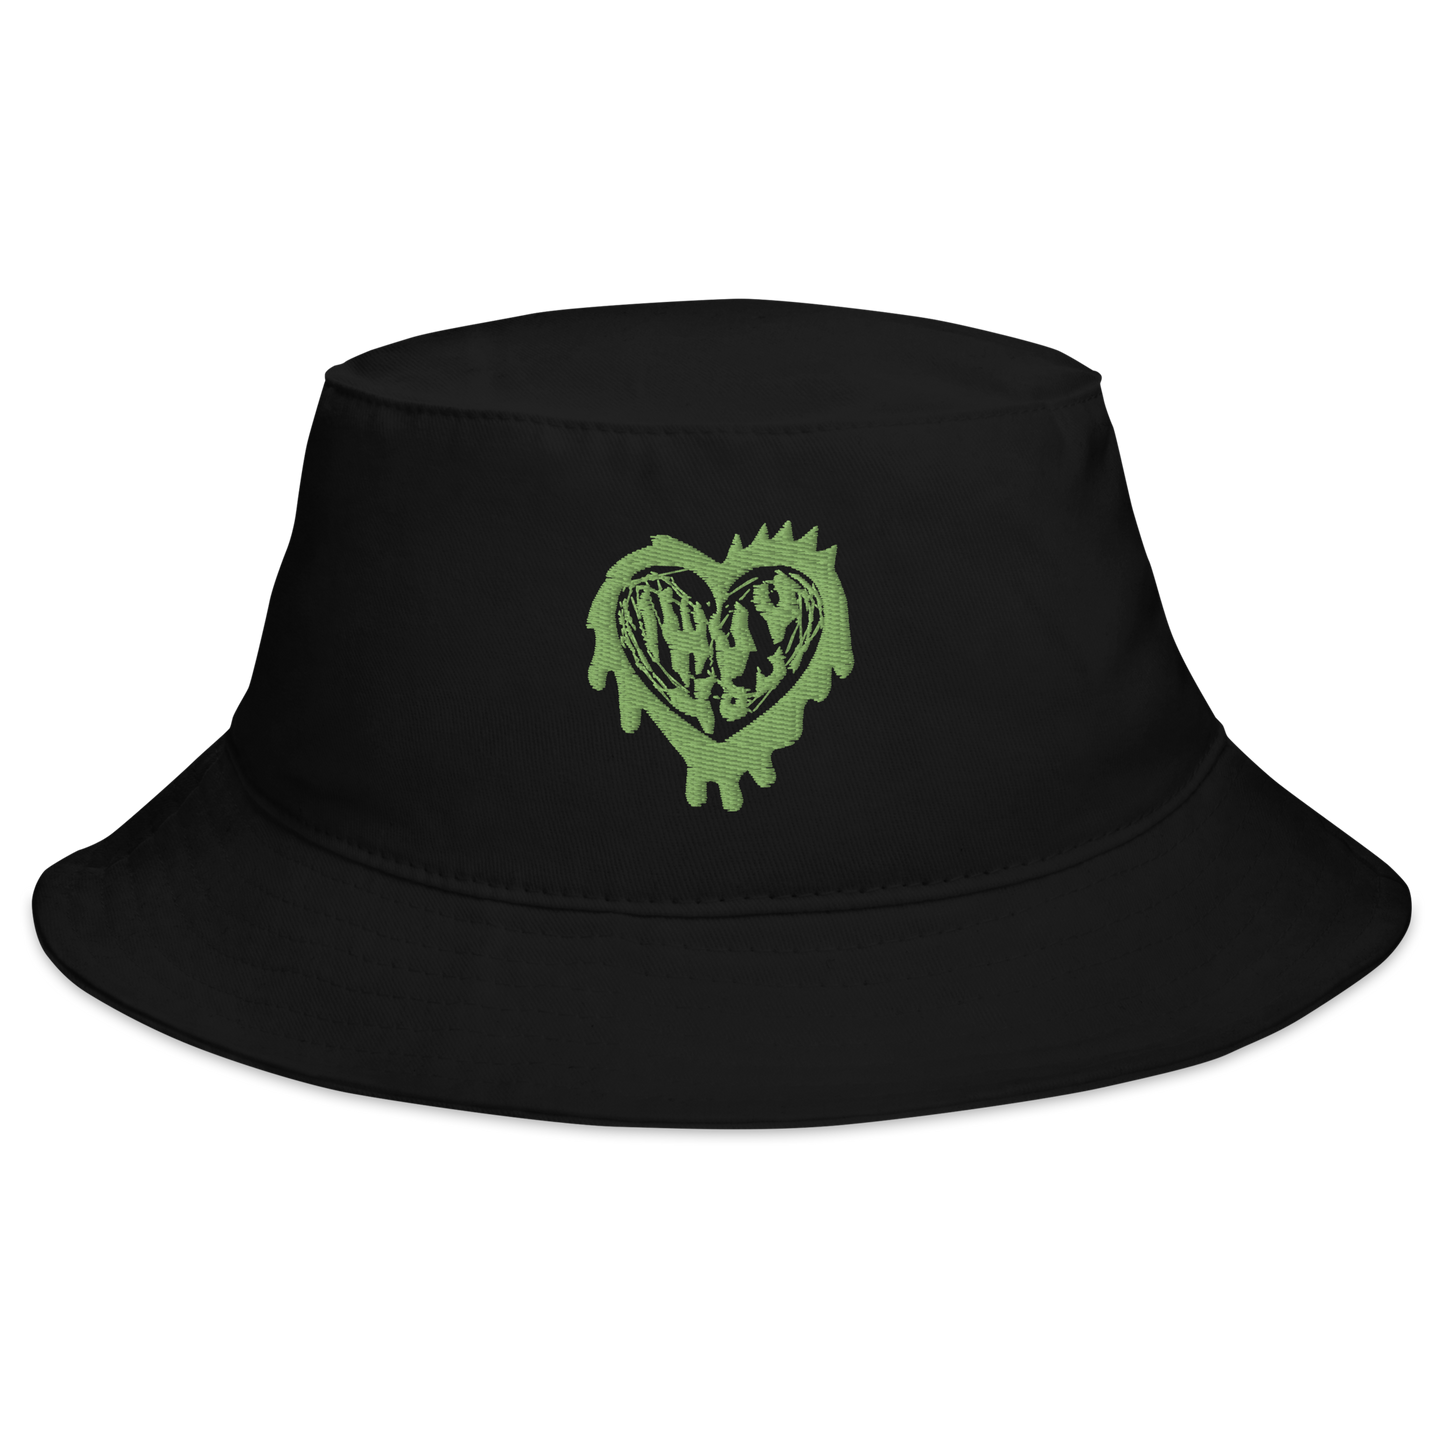 Wuv You Heart in Green on Black Bucket Hat